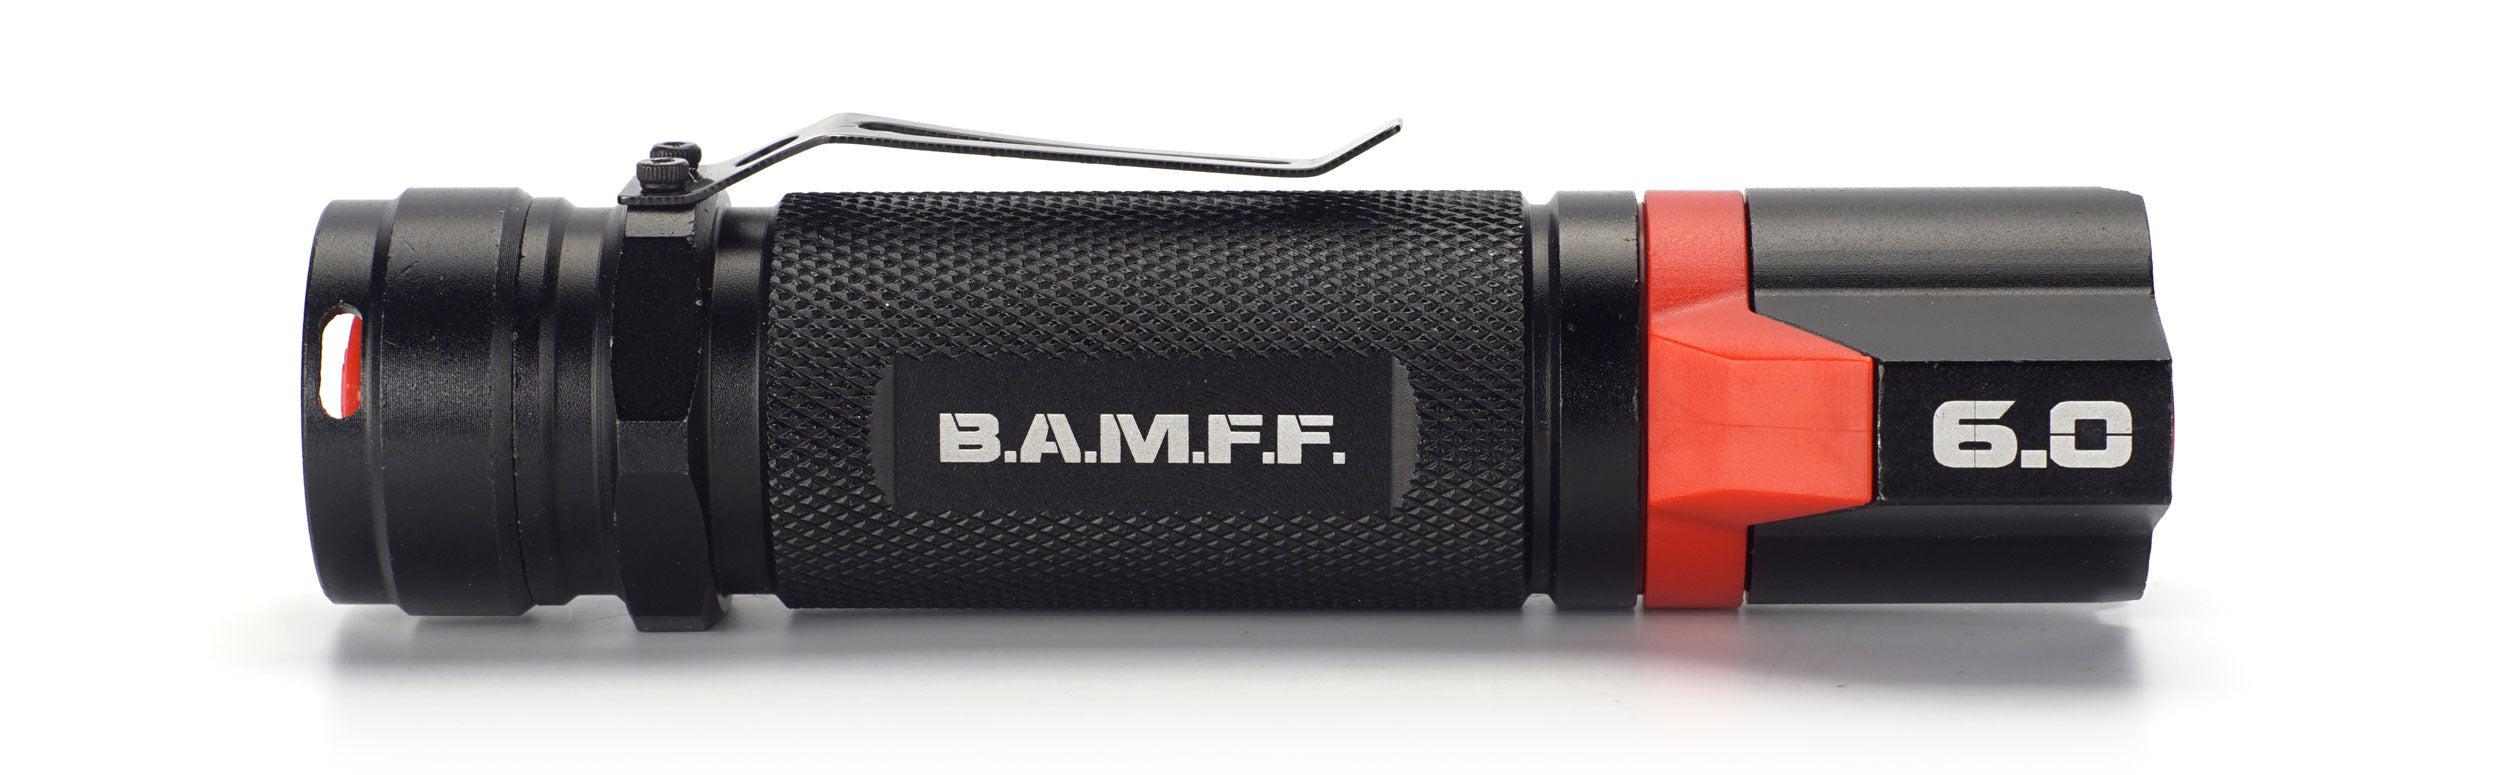 landscape side shot of a BAMFF 6.0 tactical flashlight